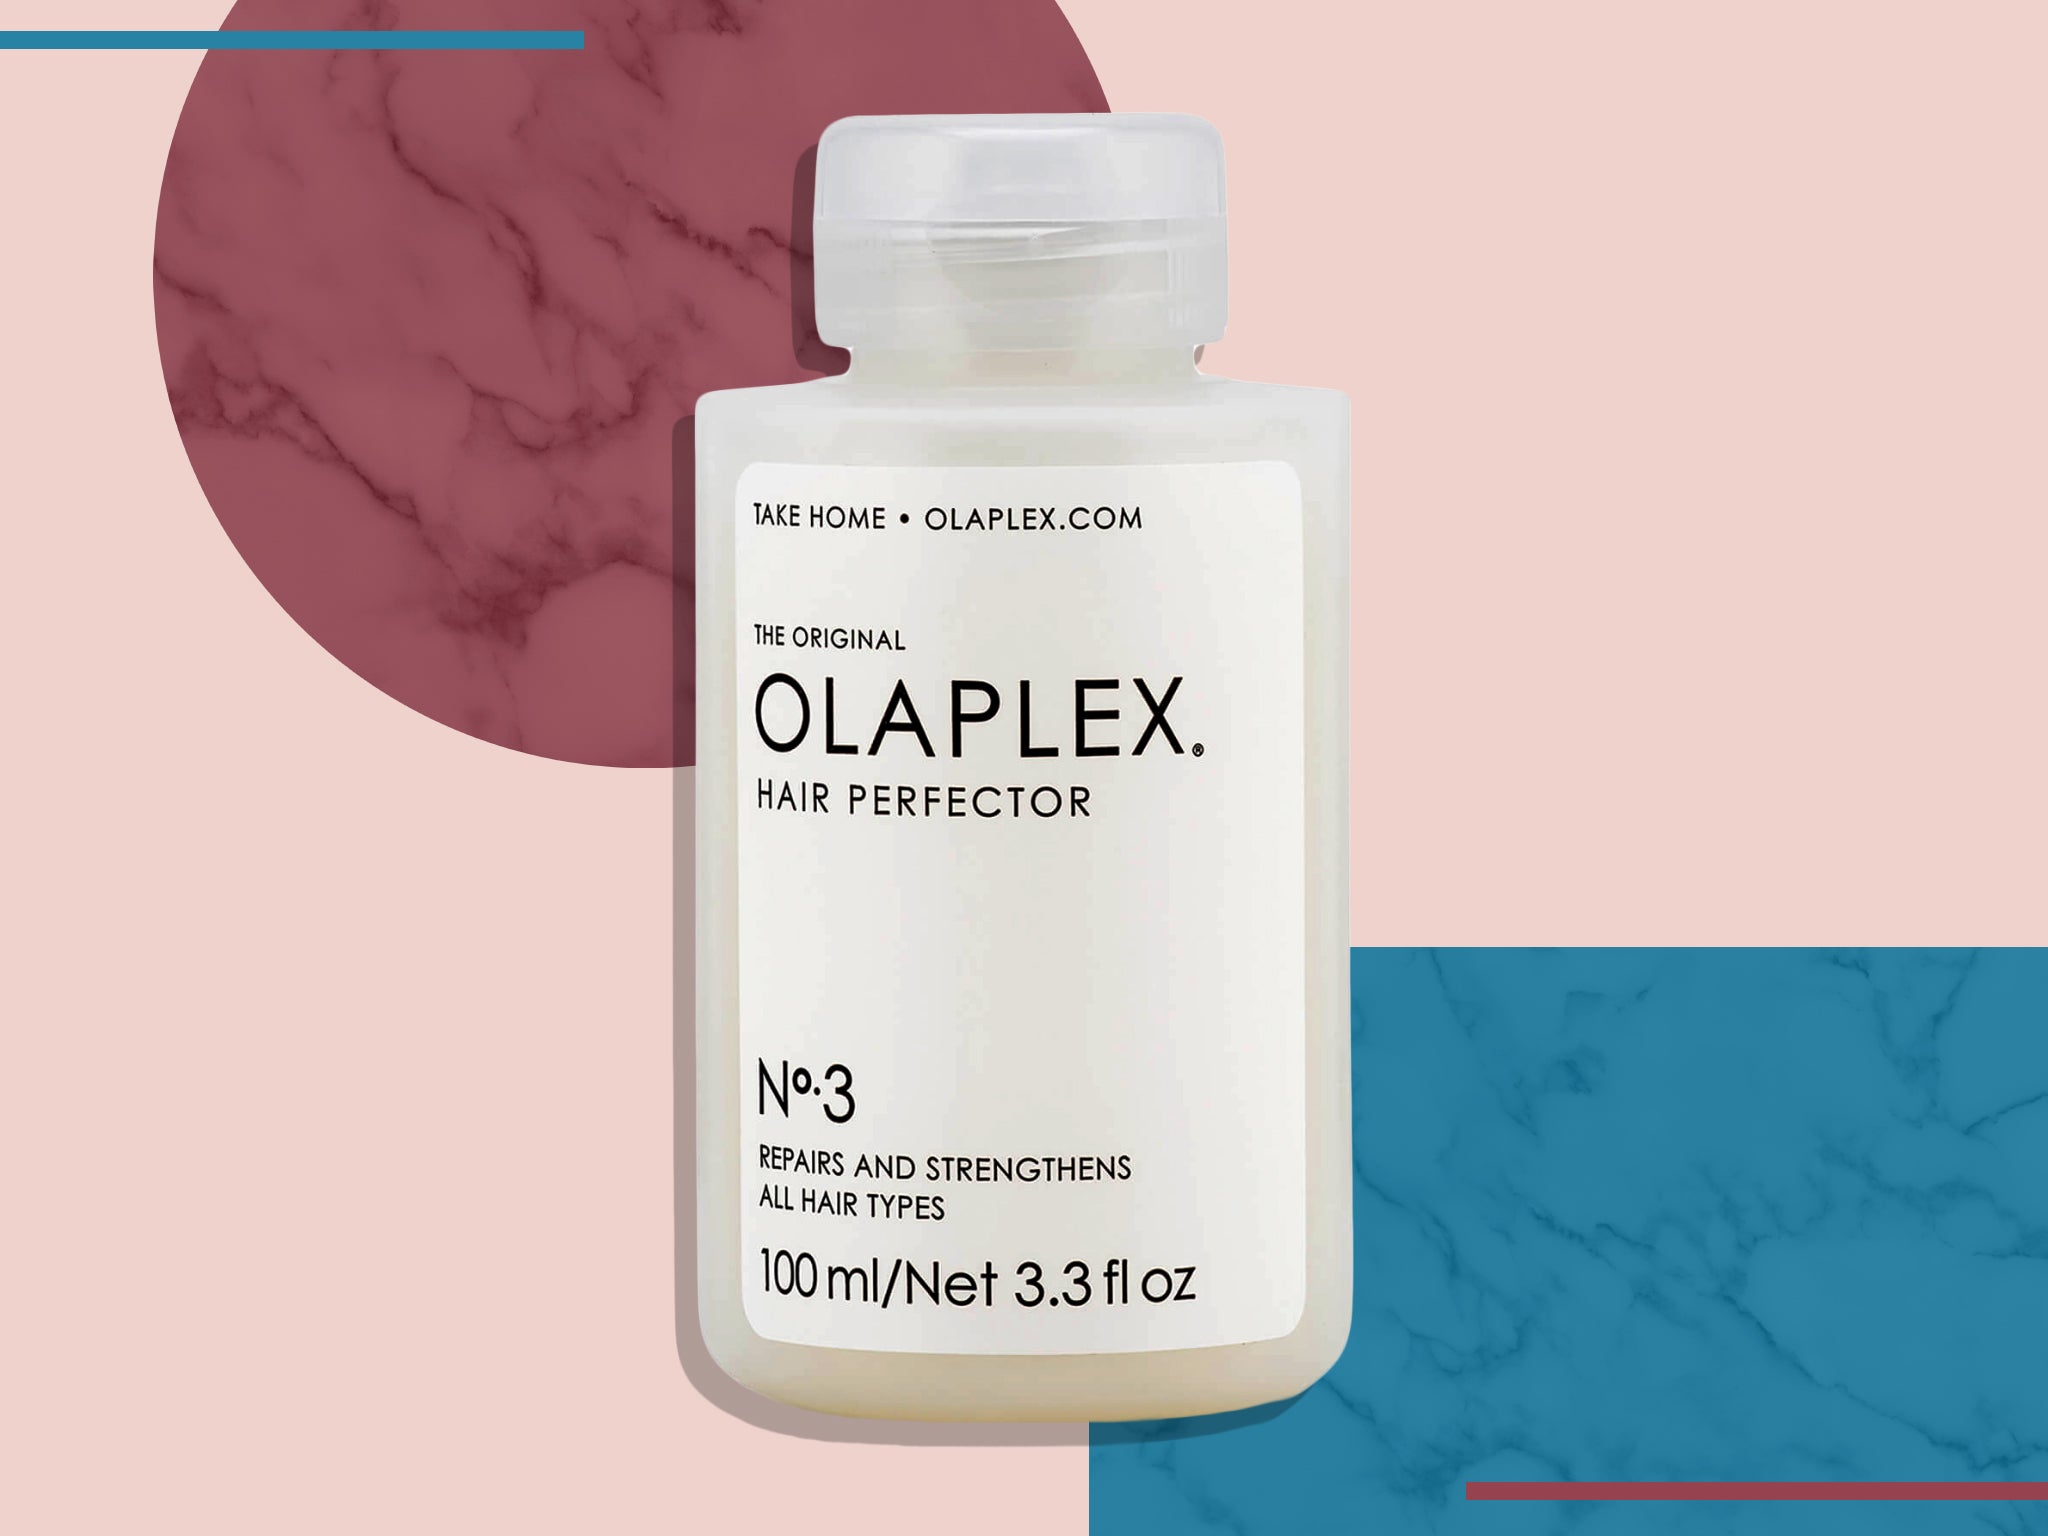 Olaplex has revolutionised the way coloured and heat-damaged hair is treated